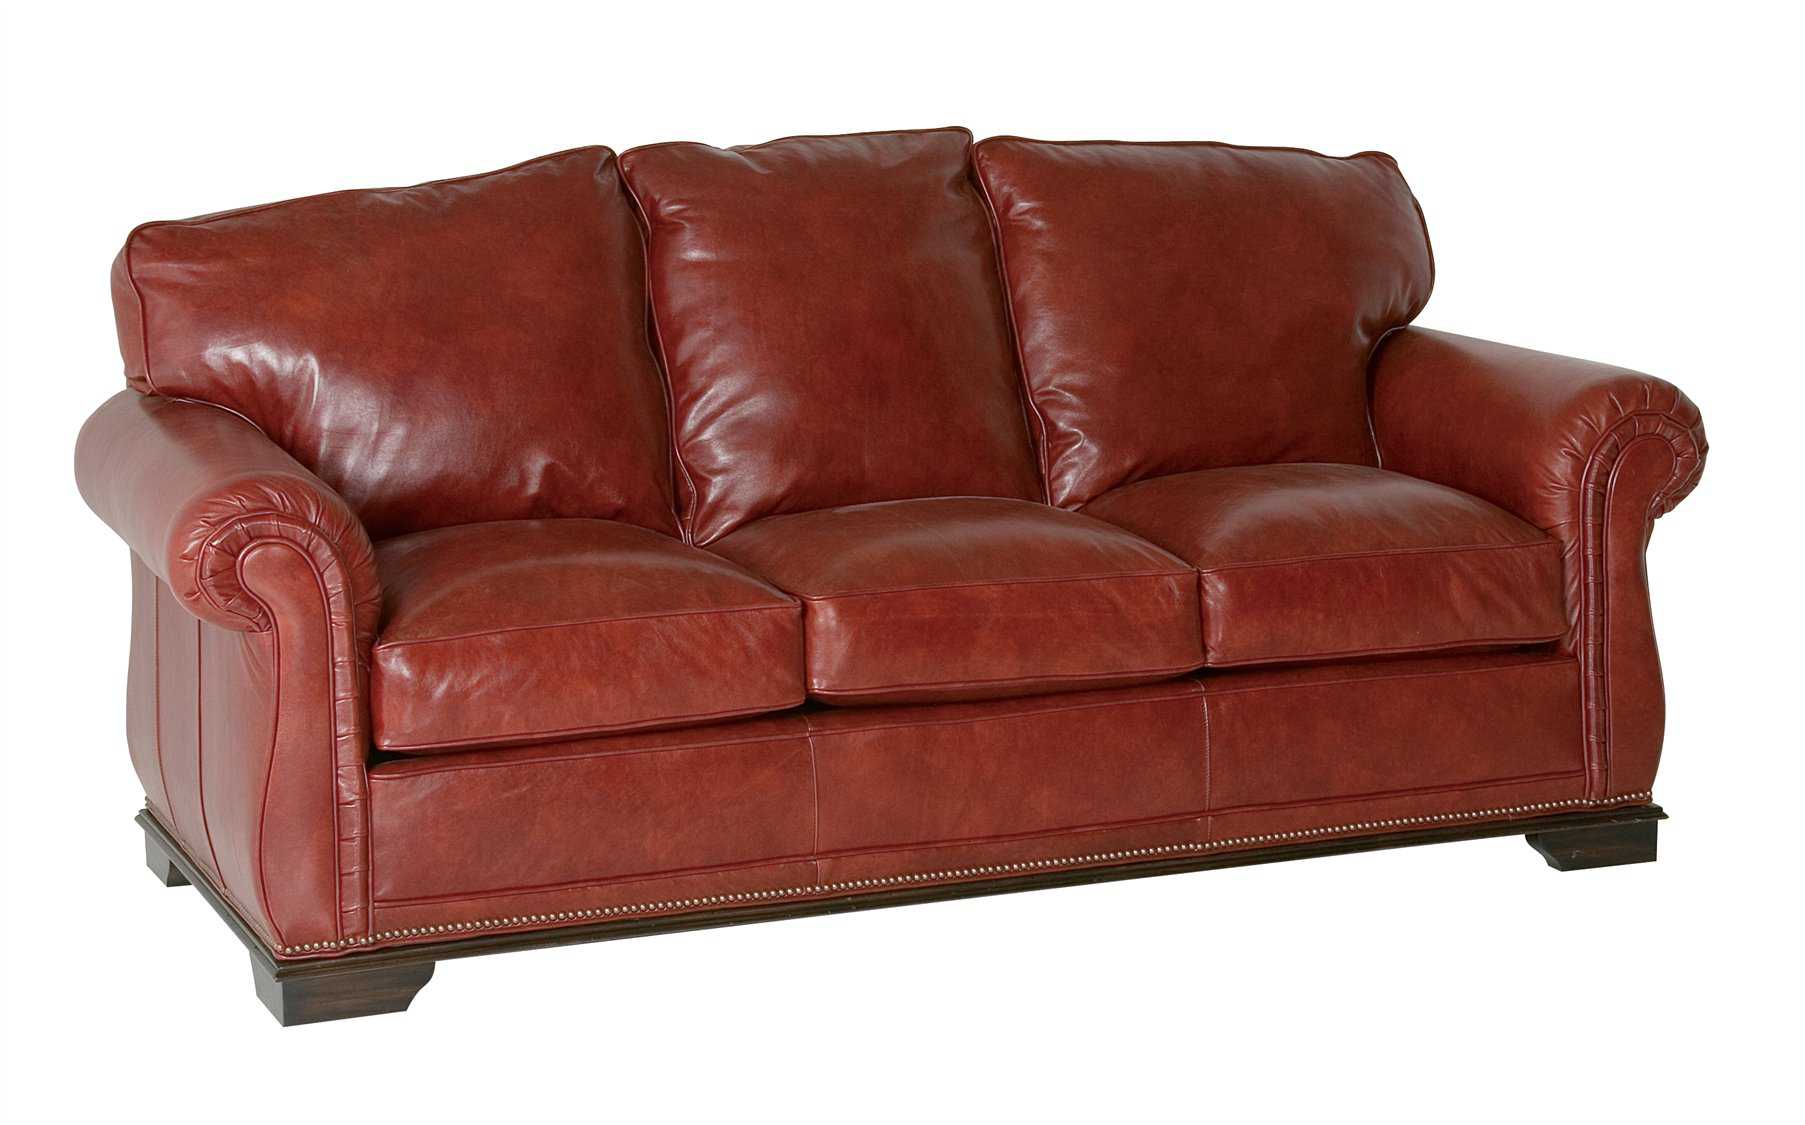 classic leather providence sofa